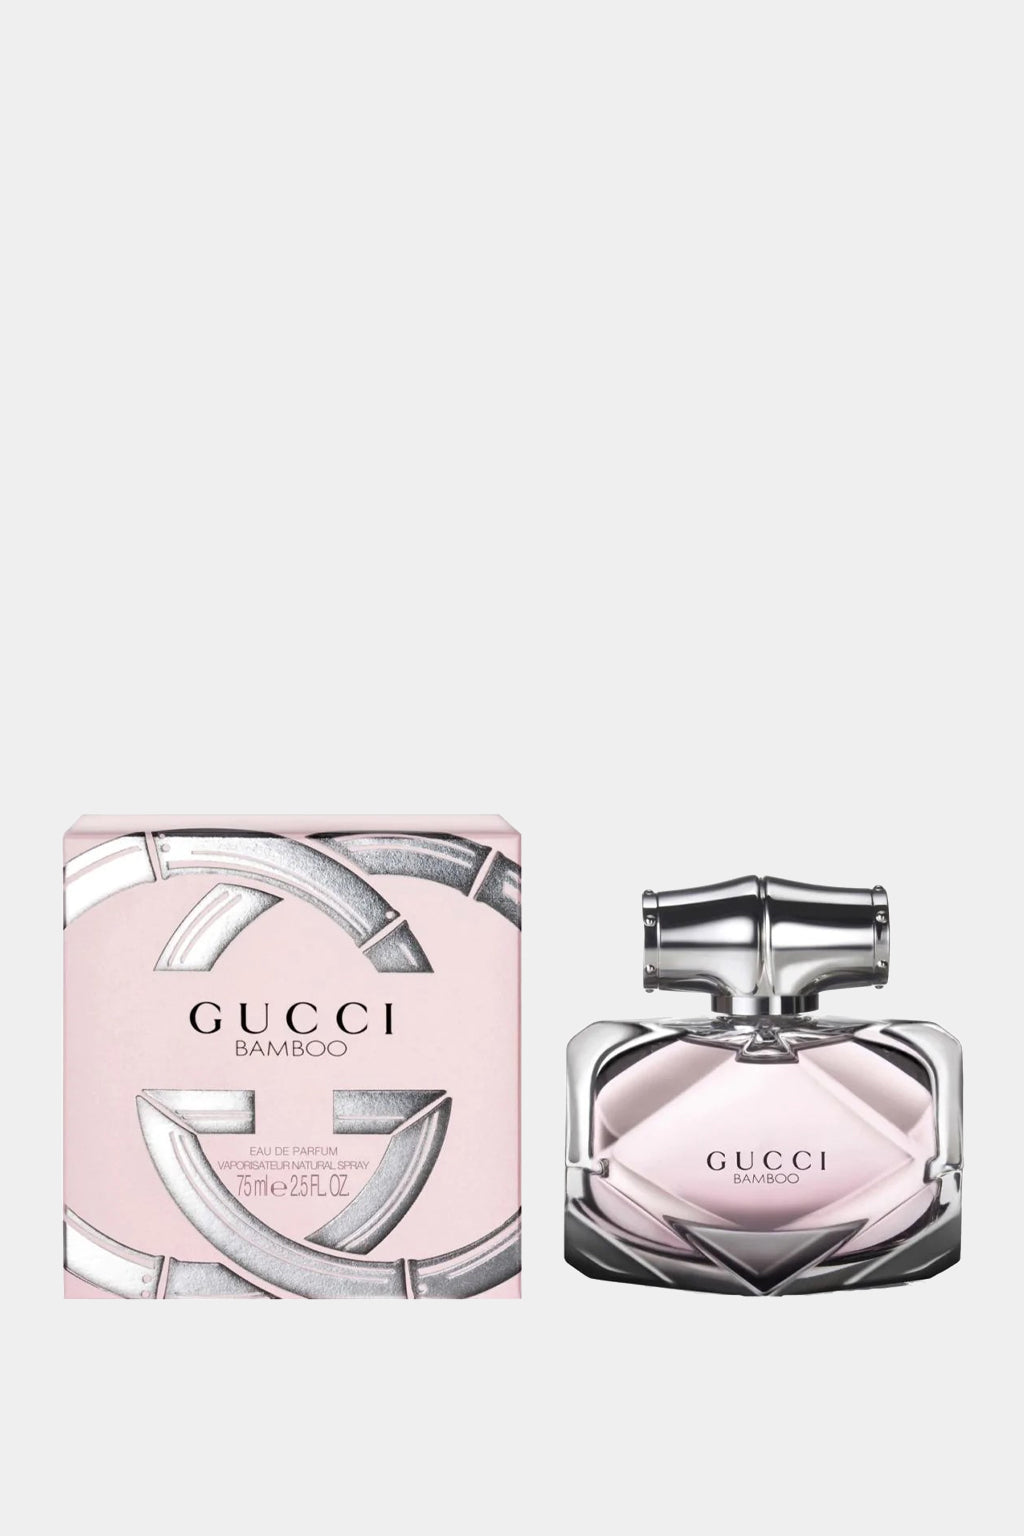 Gucci - Bamboo Eau de Parfum